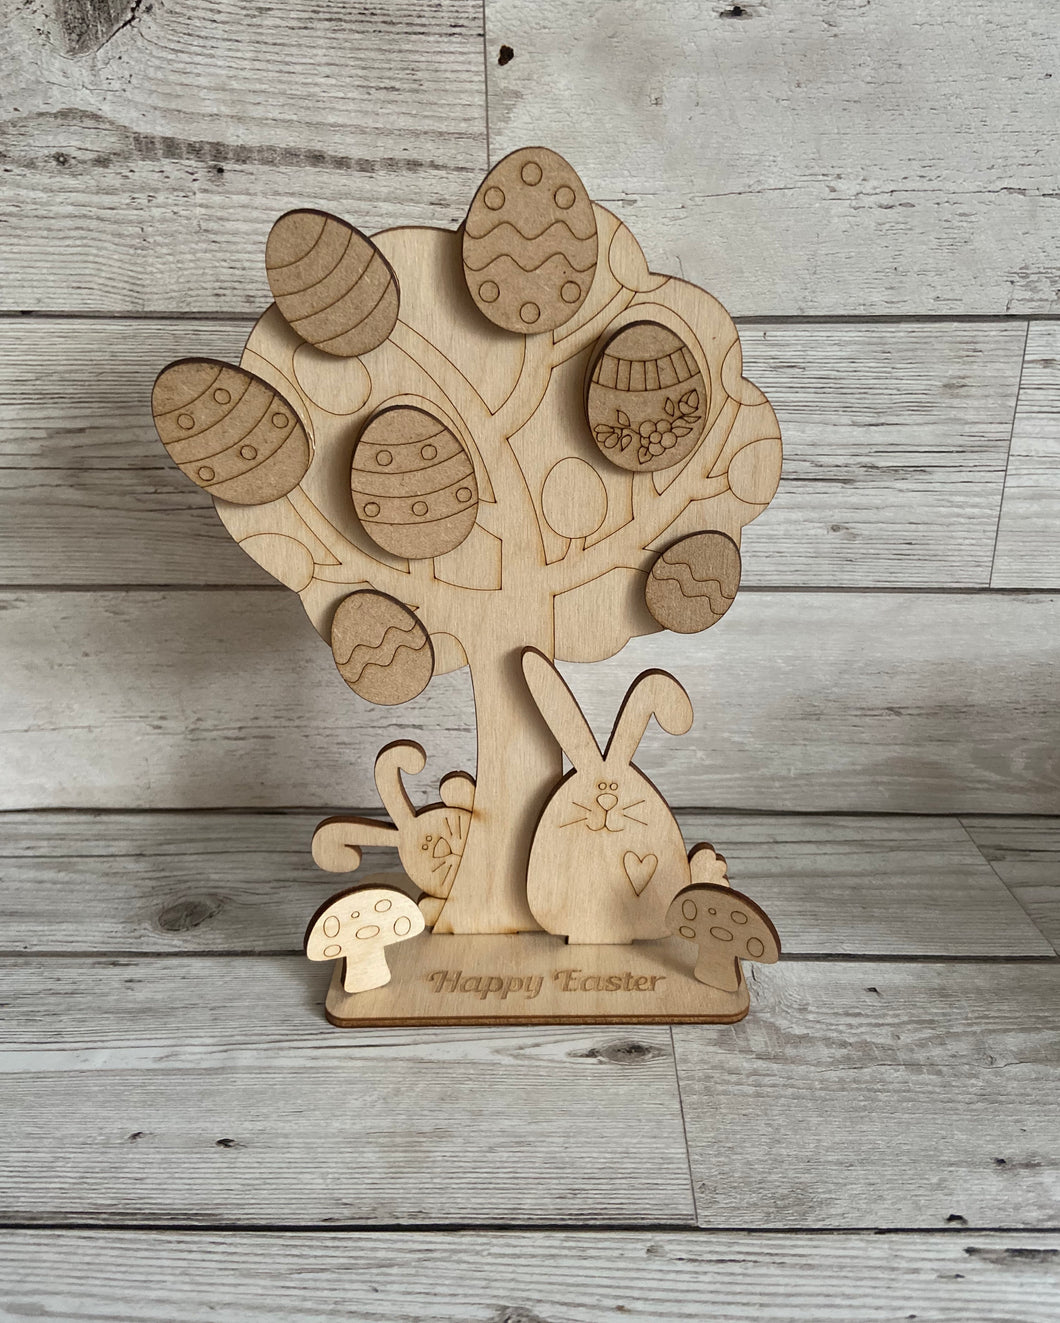 Wooden freestanding Easter tree bunnies - Laser LLama Designs Ltd